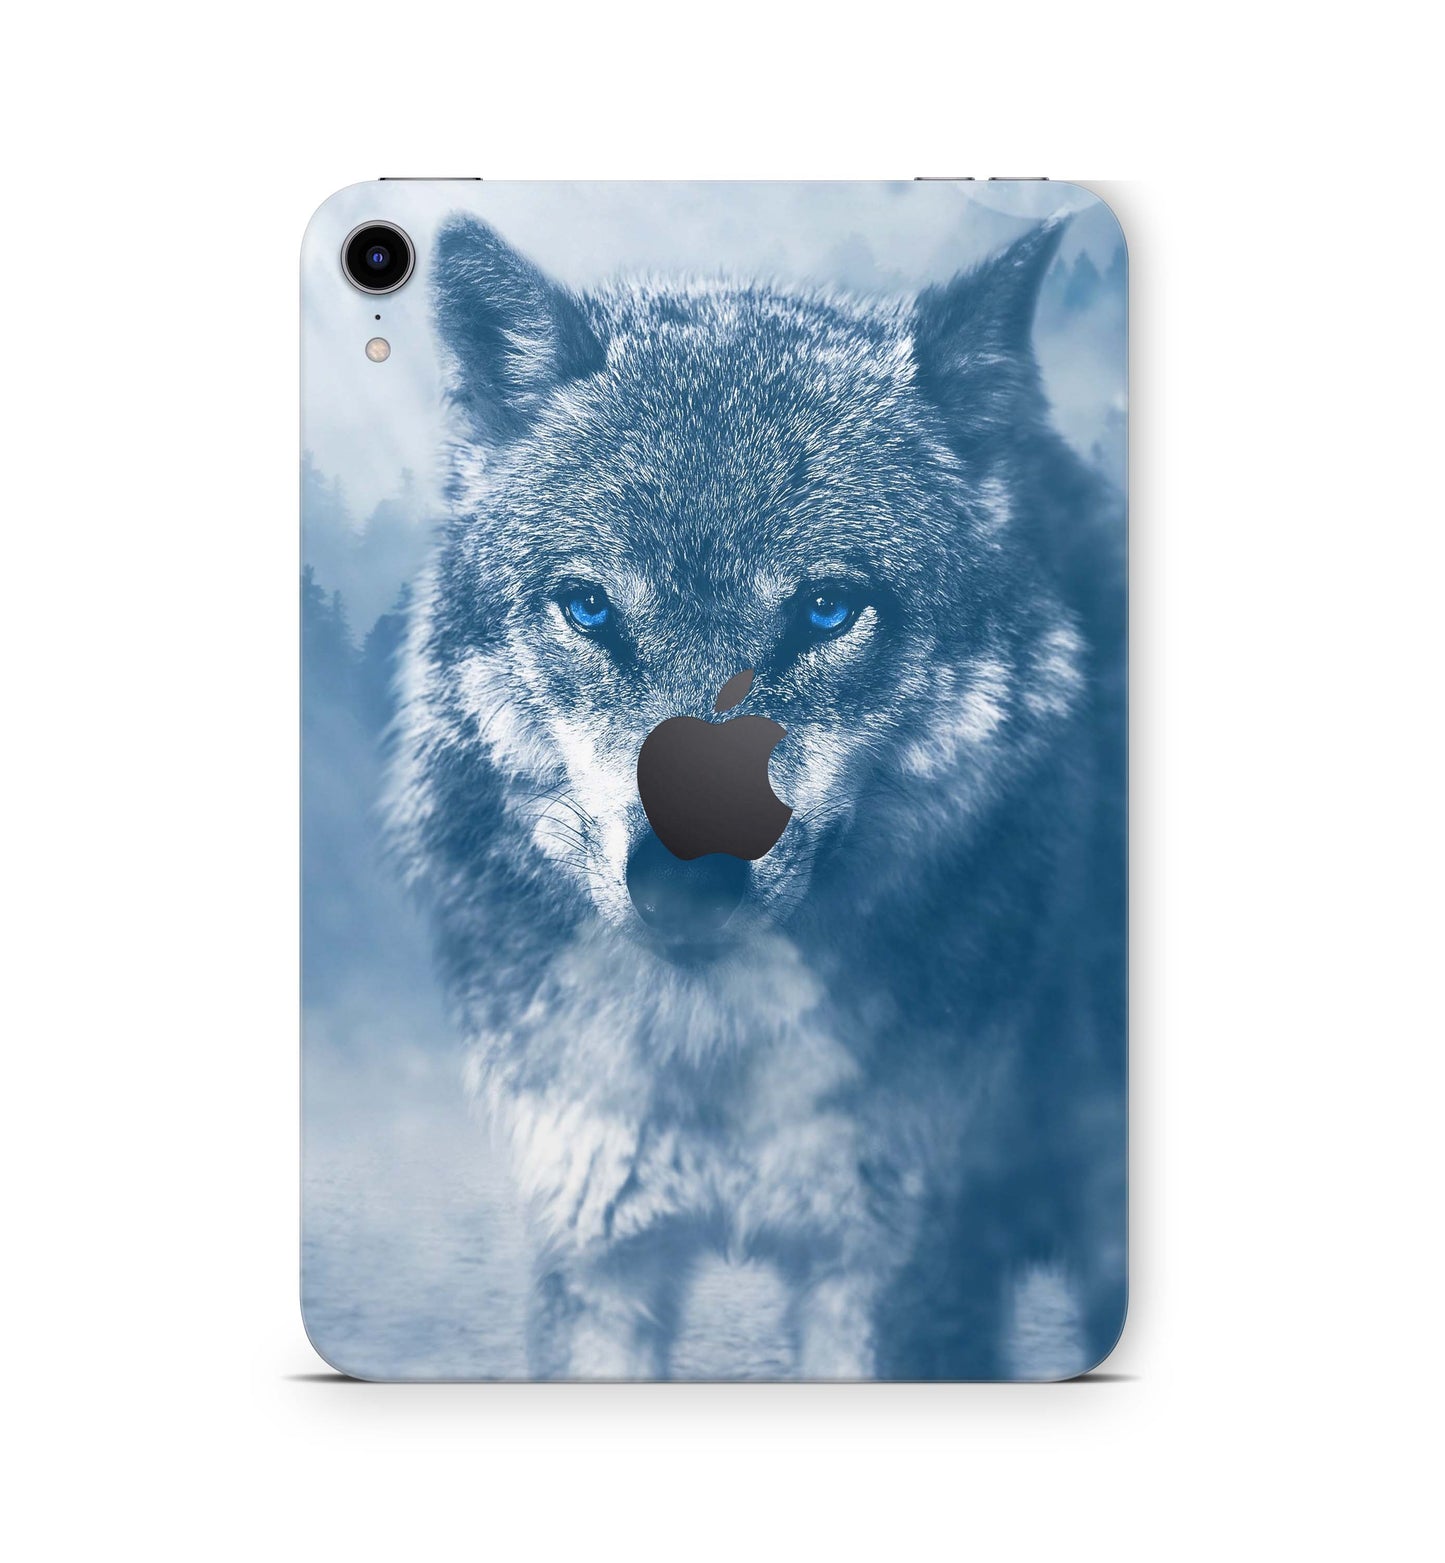 iPad Air Skin Design Cover Folie Vinyl Skins & Wraps für alle iPad Air Modelle Aufkleber Skins4u Wolf-blue-eyes  